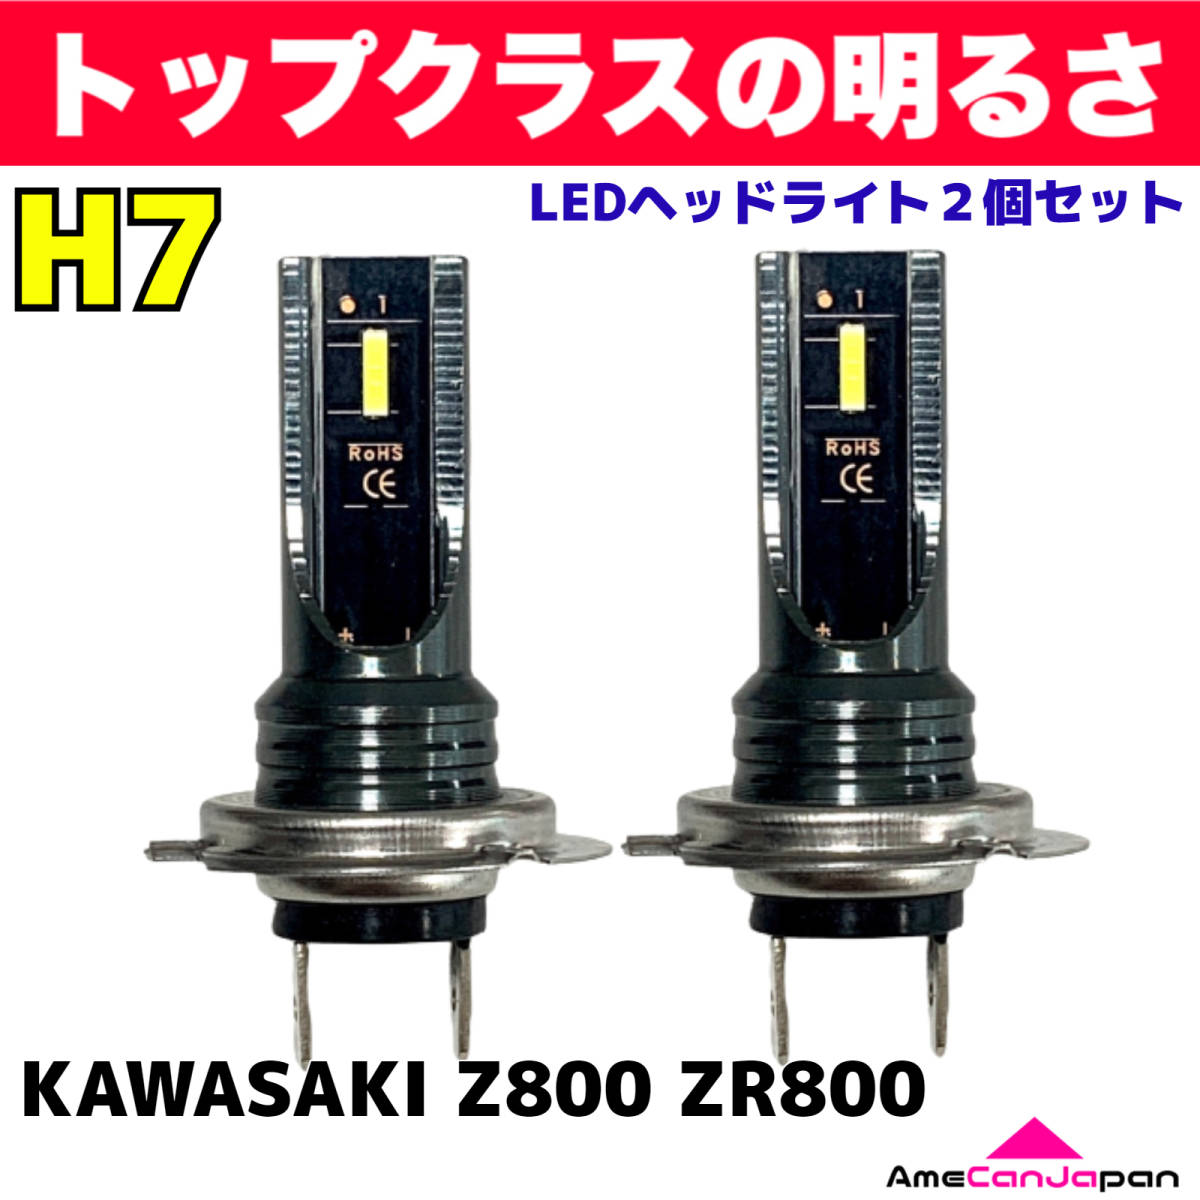 AmeCanJapan KAWASAKI カワサキ Z800 ZR800 適合 H7 LED ヘッドライト バイク用 Hi LOW ホワイト 2灯 爆光 CSPチップ搭載_画像1